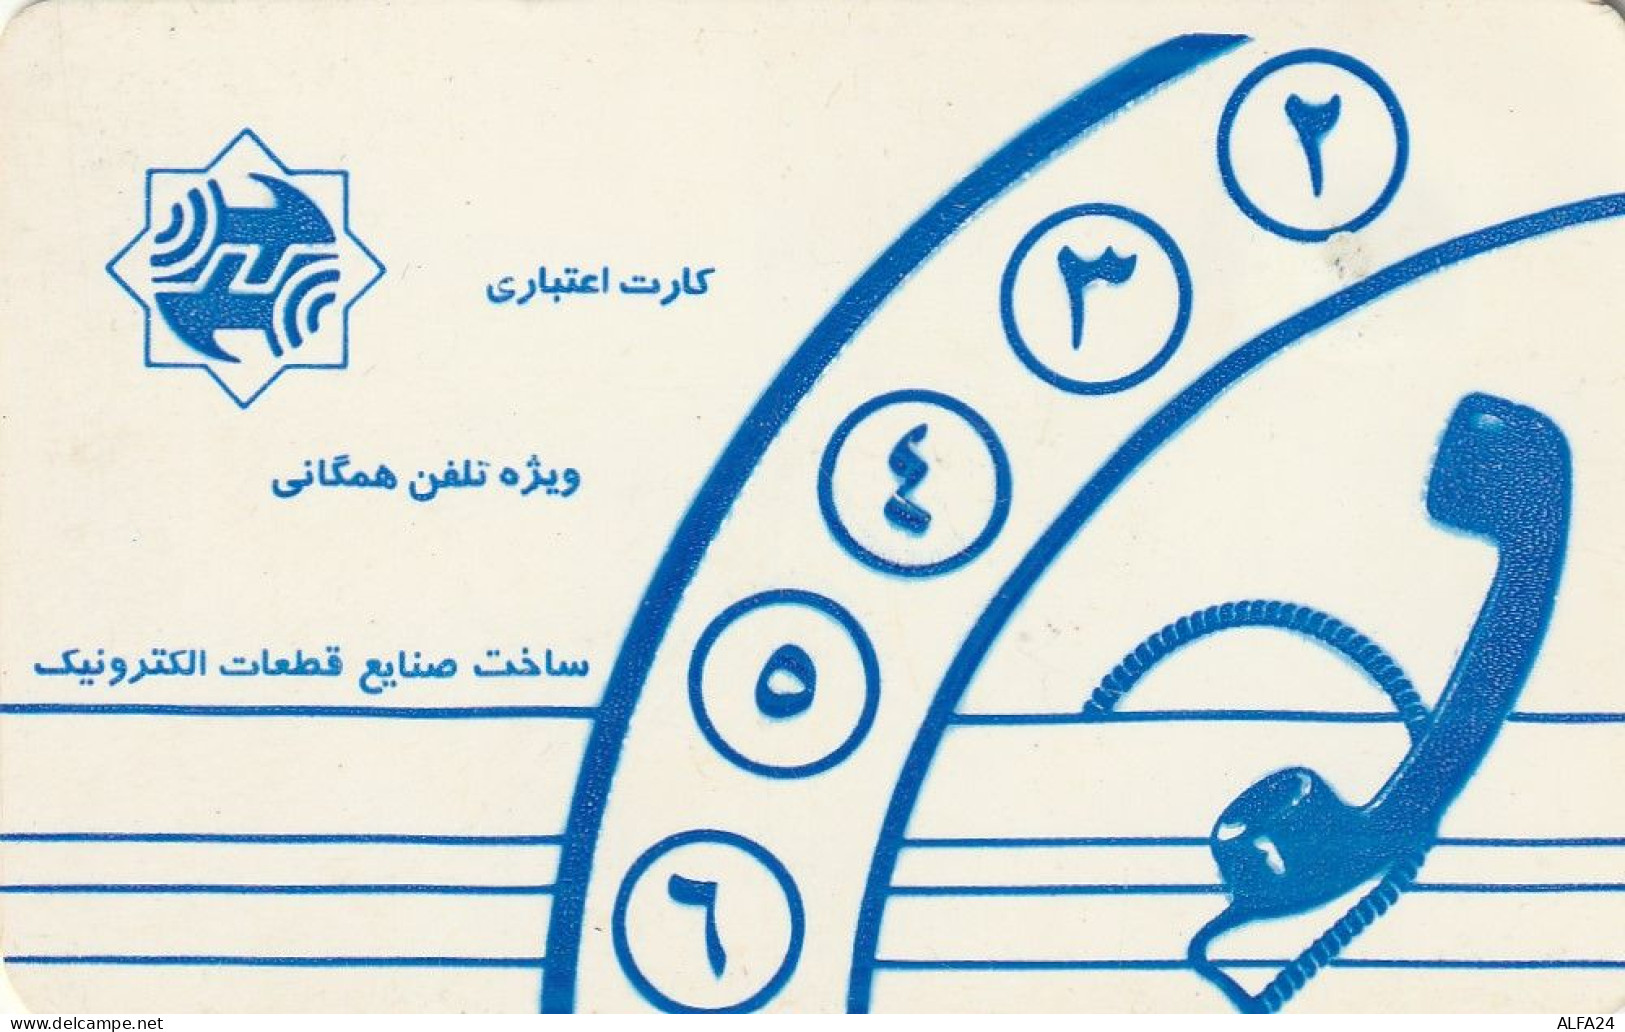 PHONE CARD IRAN (E77.5.4 - Iran